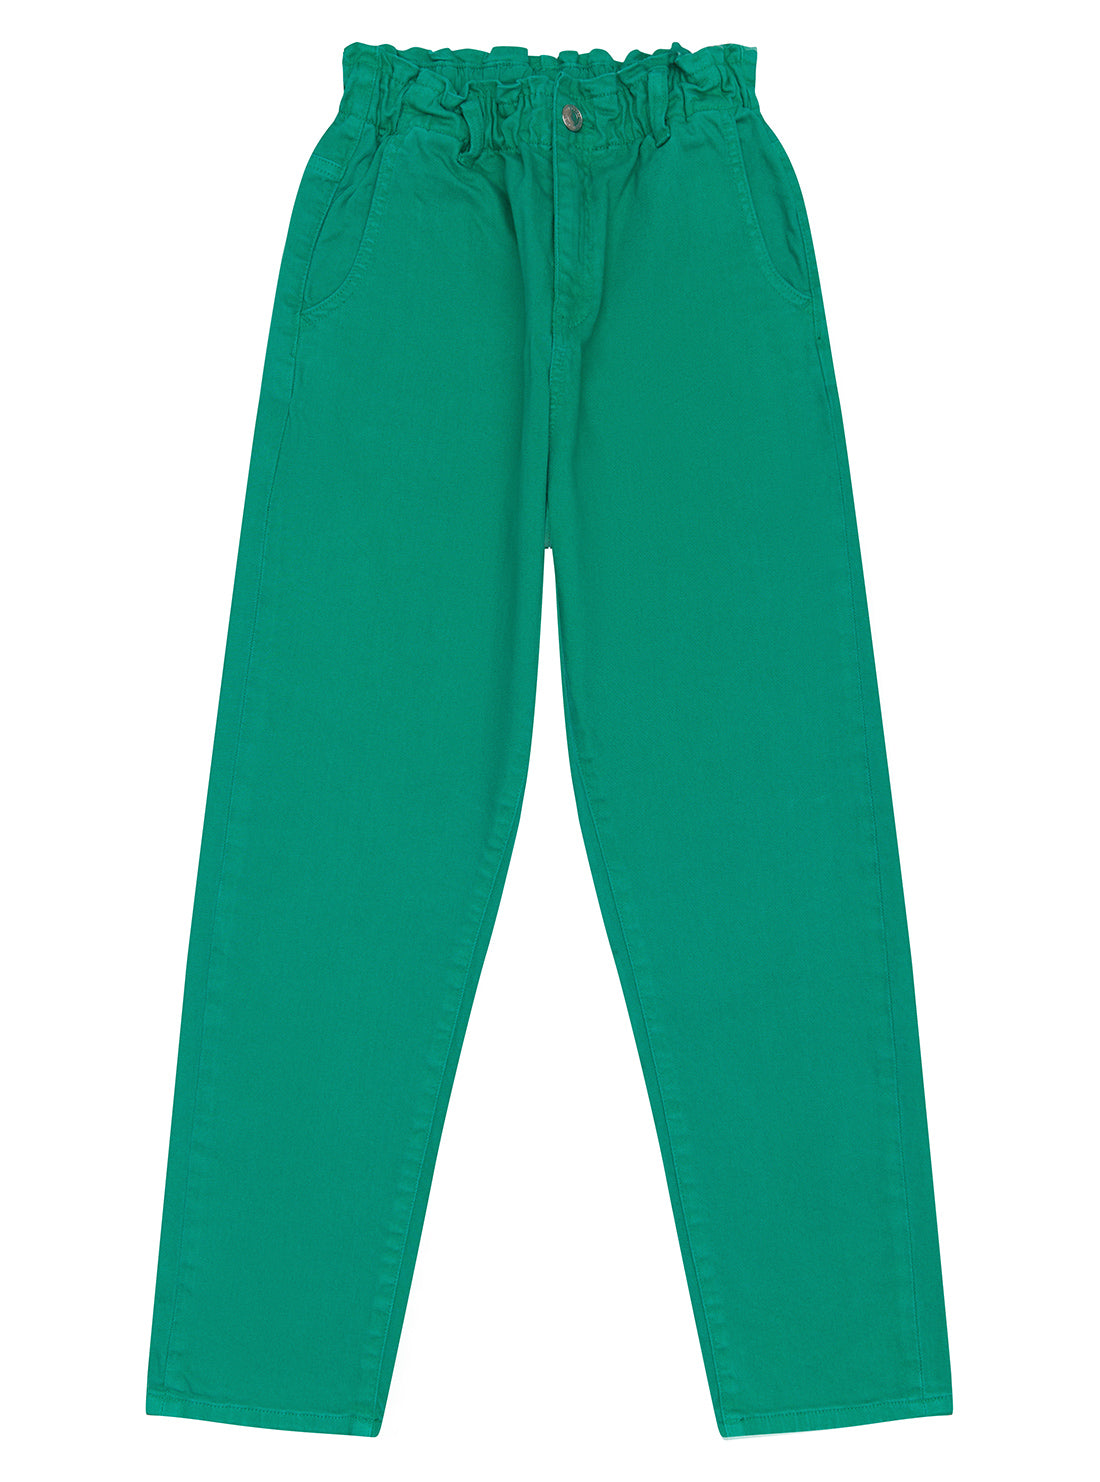 GUESS Green Bull Denim Paperbag Pants (7-16) front view